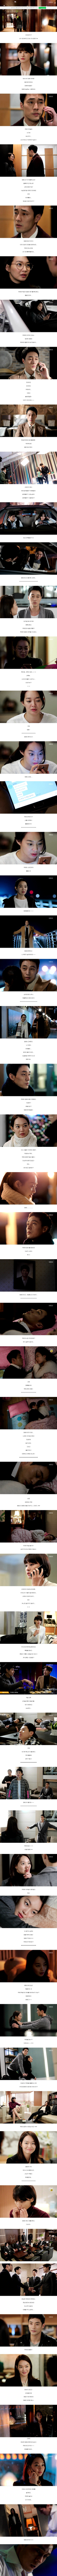 episode 8 captures for the Korean drama 'Oh My Venus'